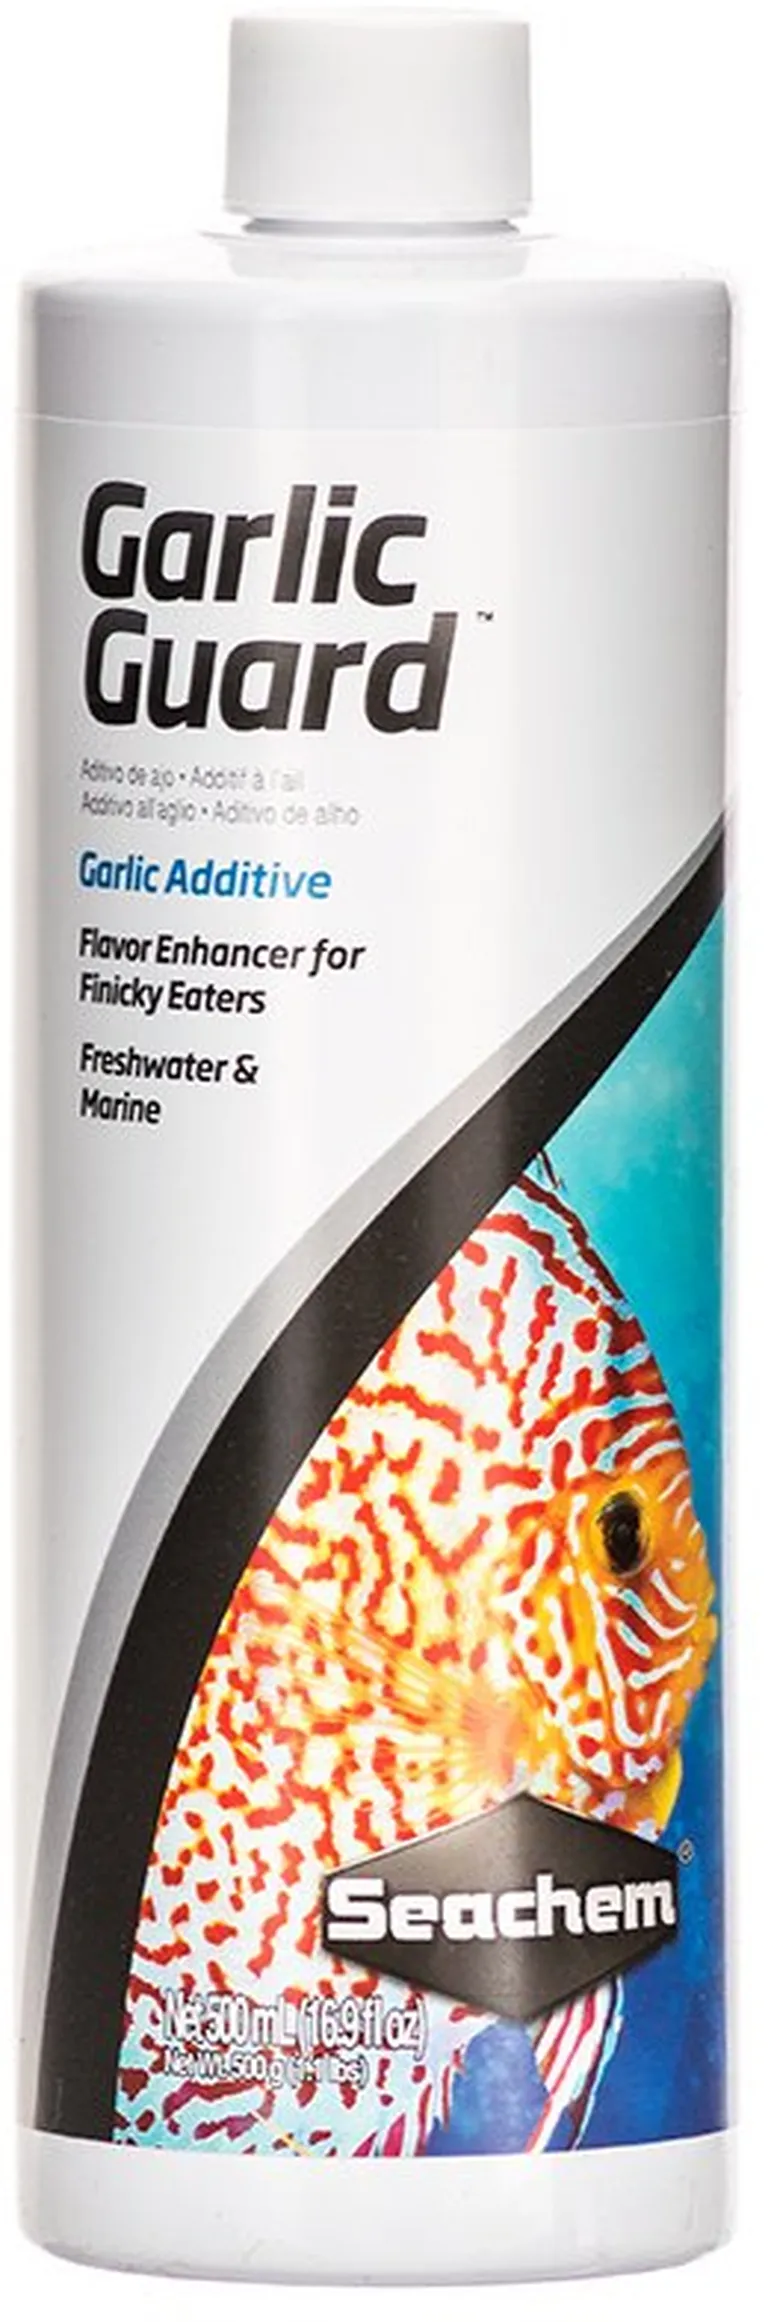 Seachem Garlic Guard Garlic Additive Flavor Enhancer for Freshwater and Marine Aquarium Fish Photo 2